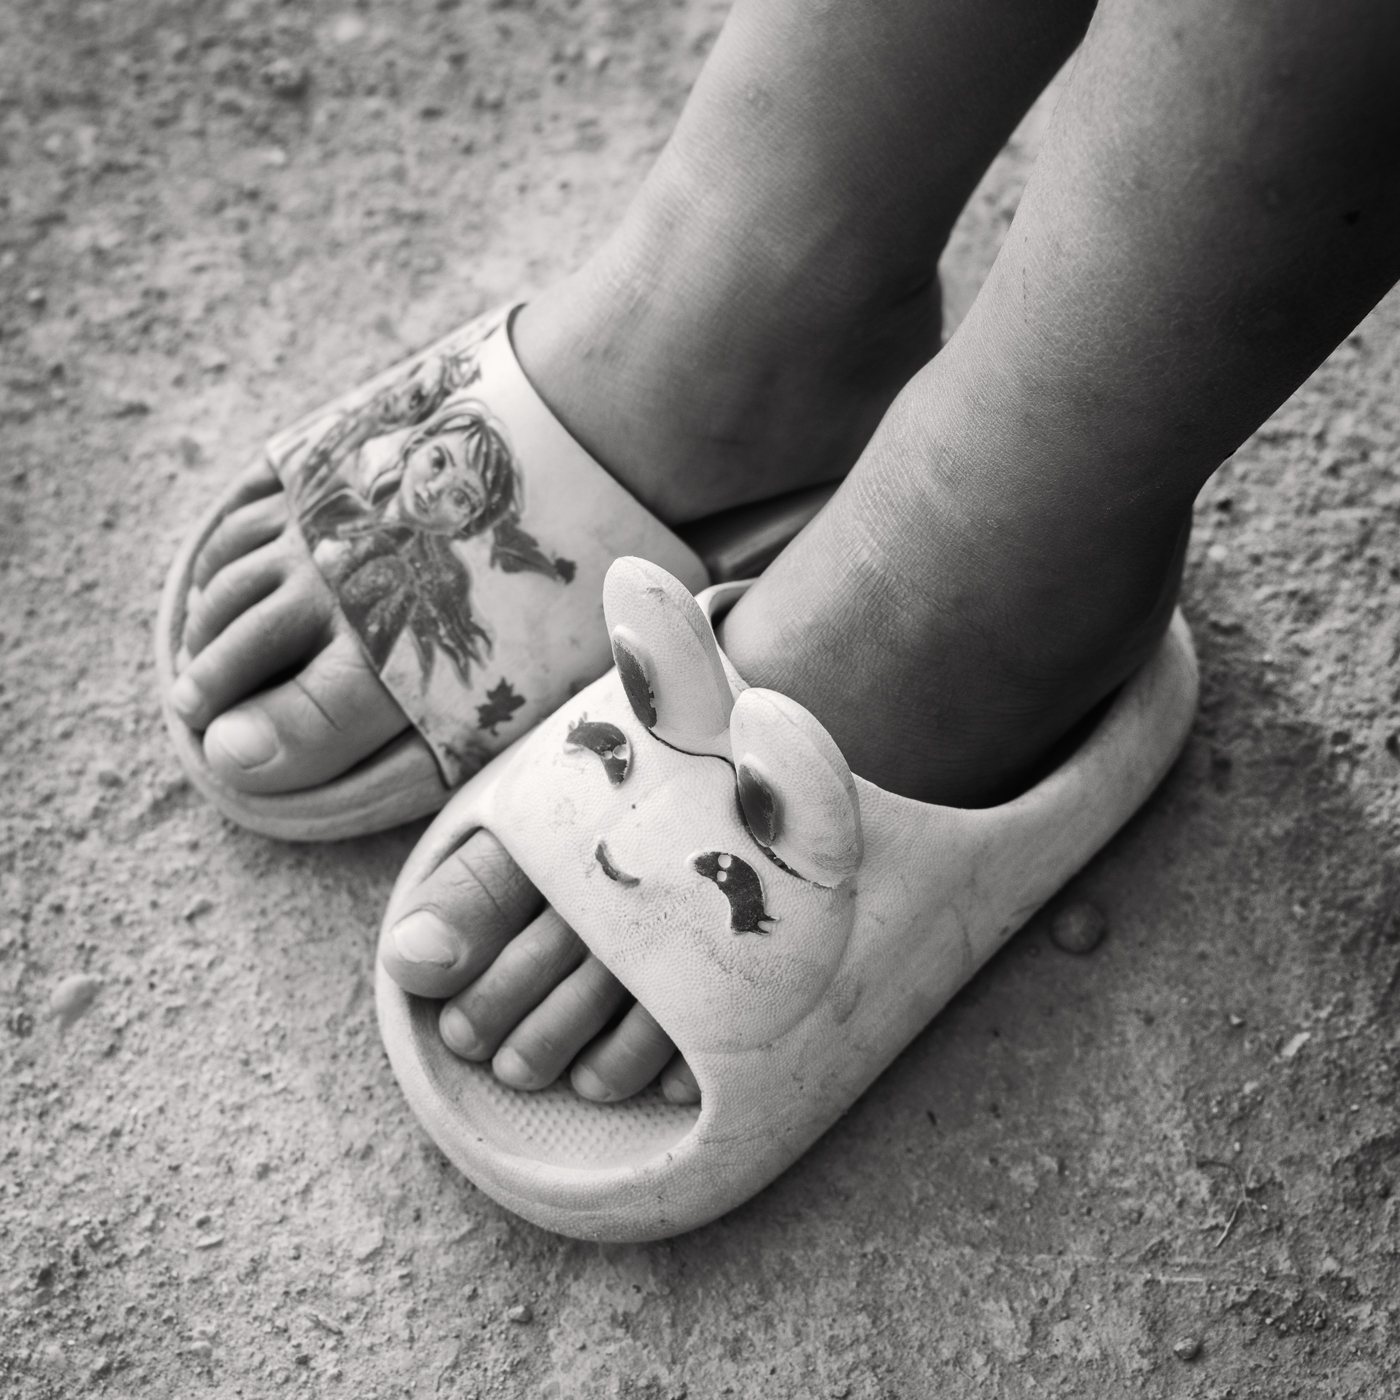 a pair of feet wearing sandals